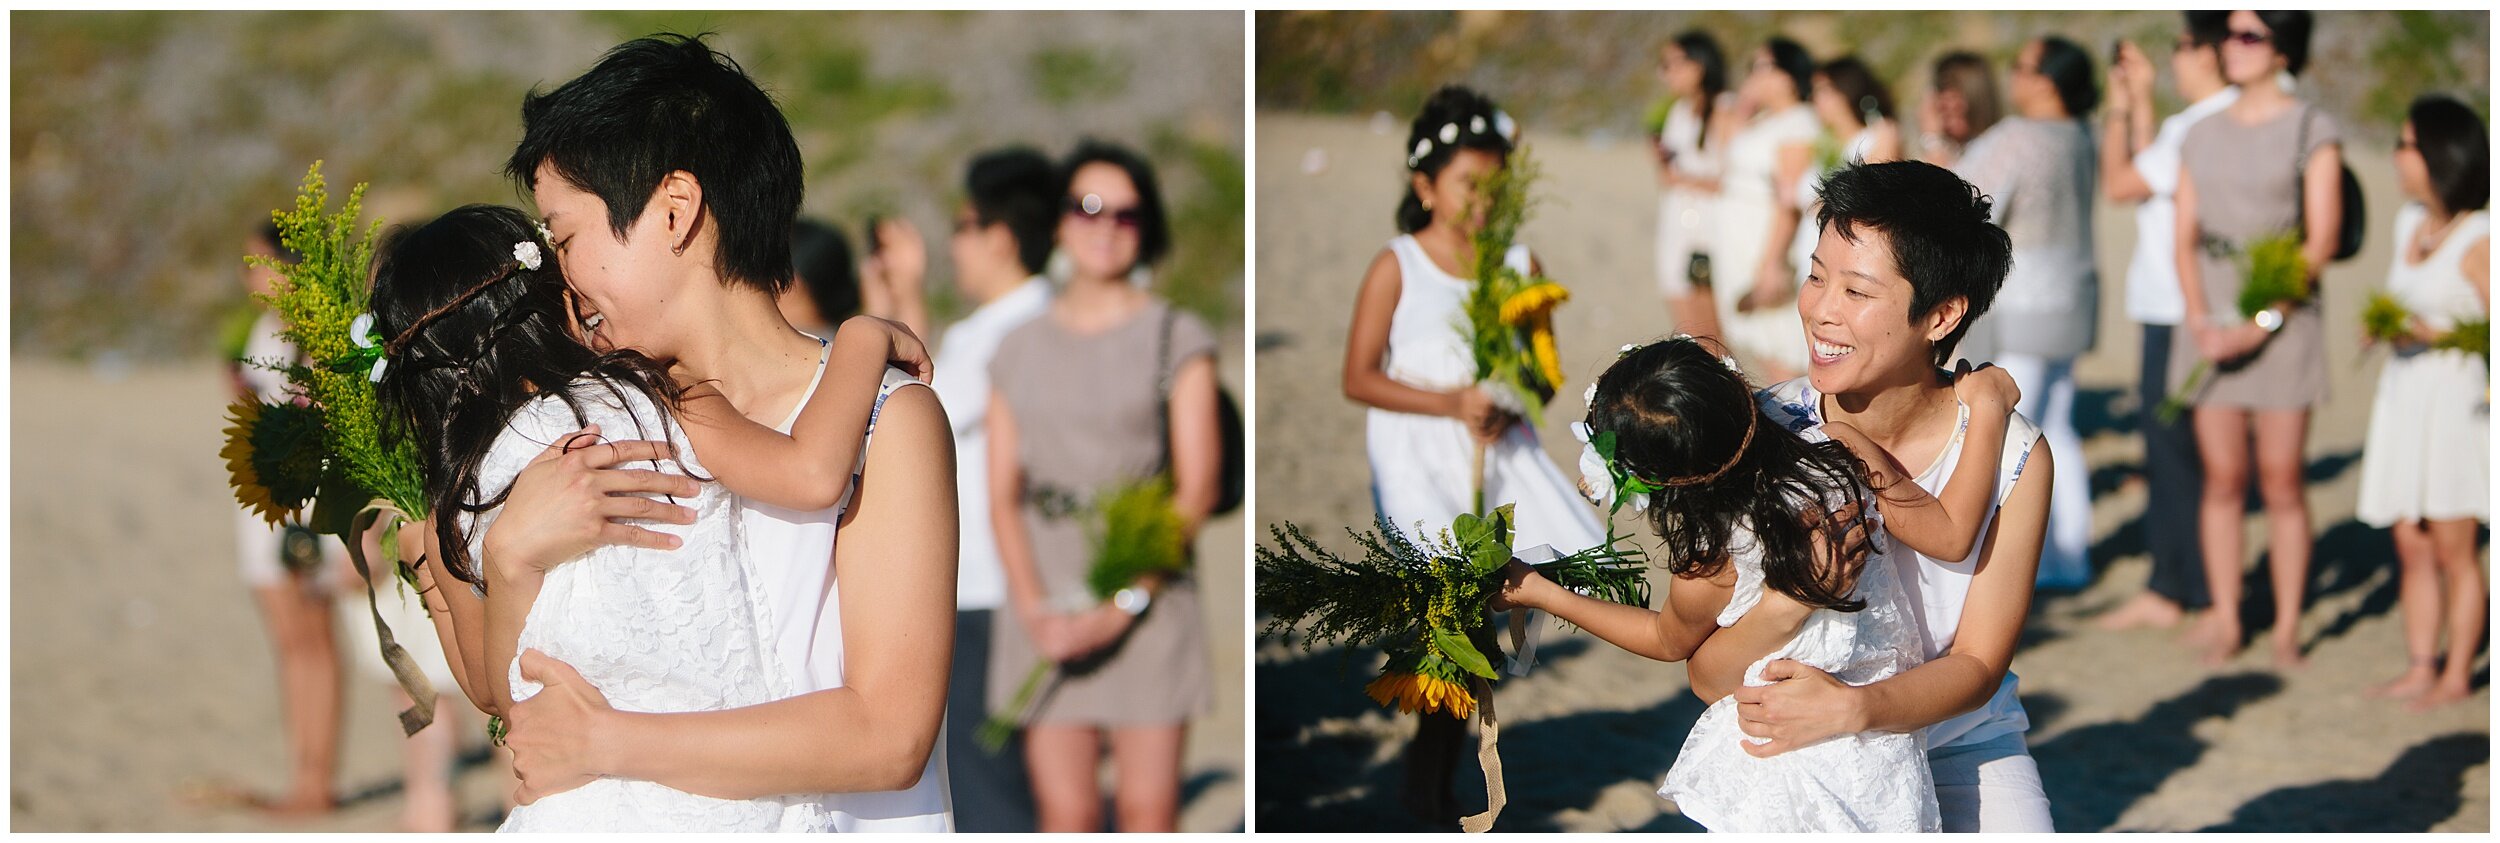 Adventure Wedding Photographer Santa Monica Beach_0112.jpg